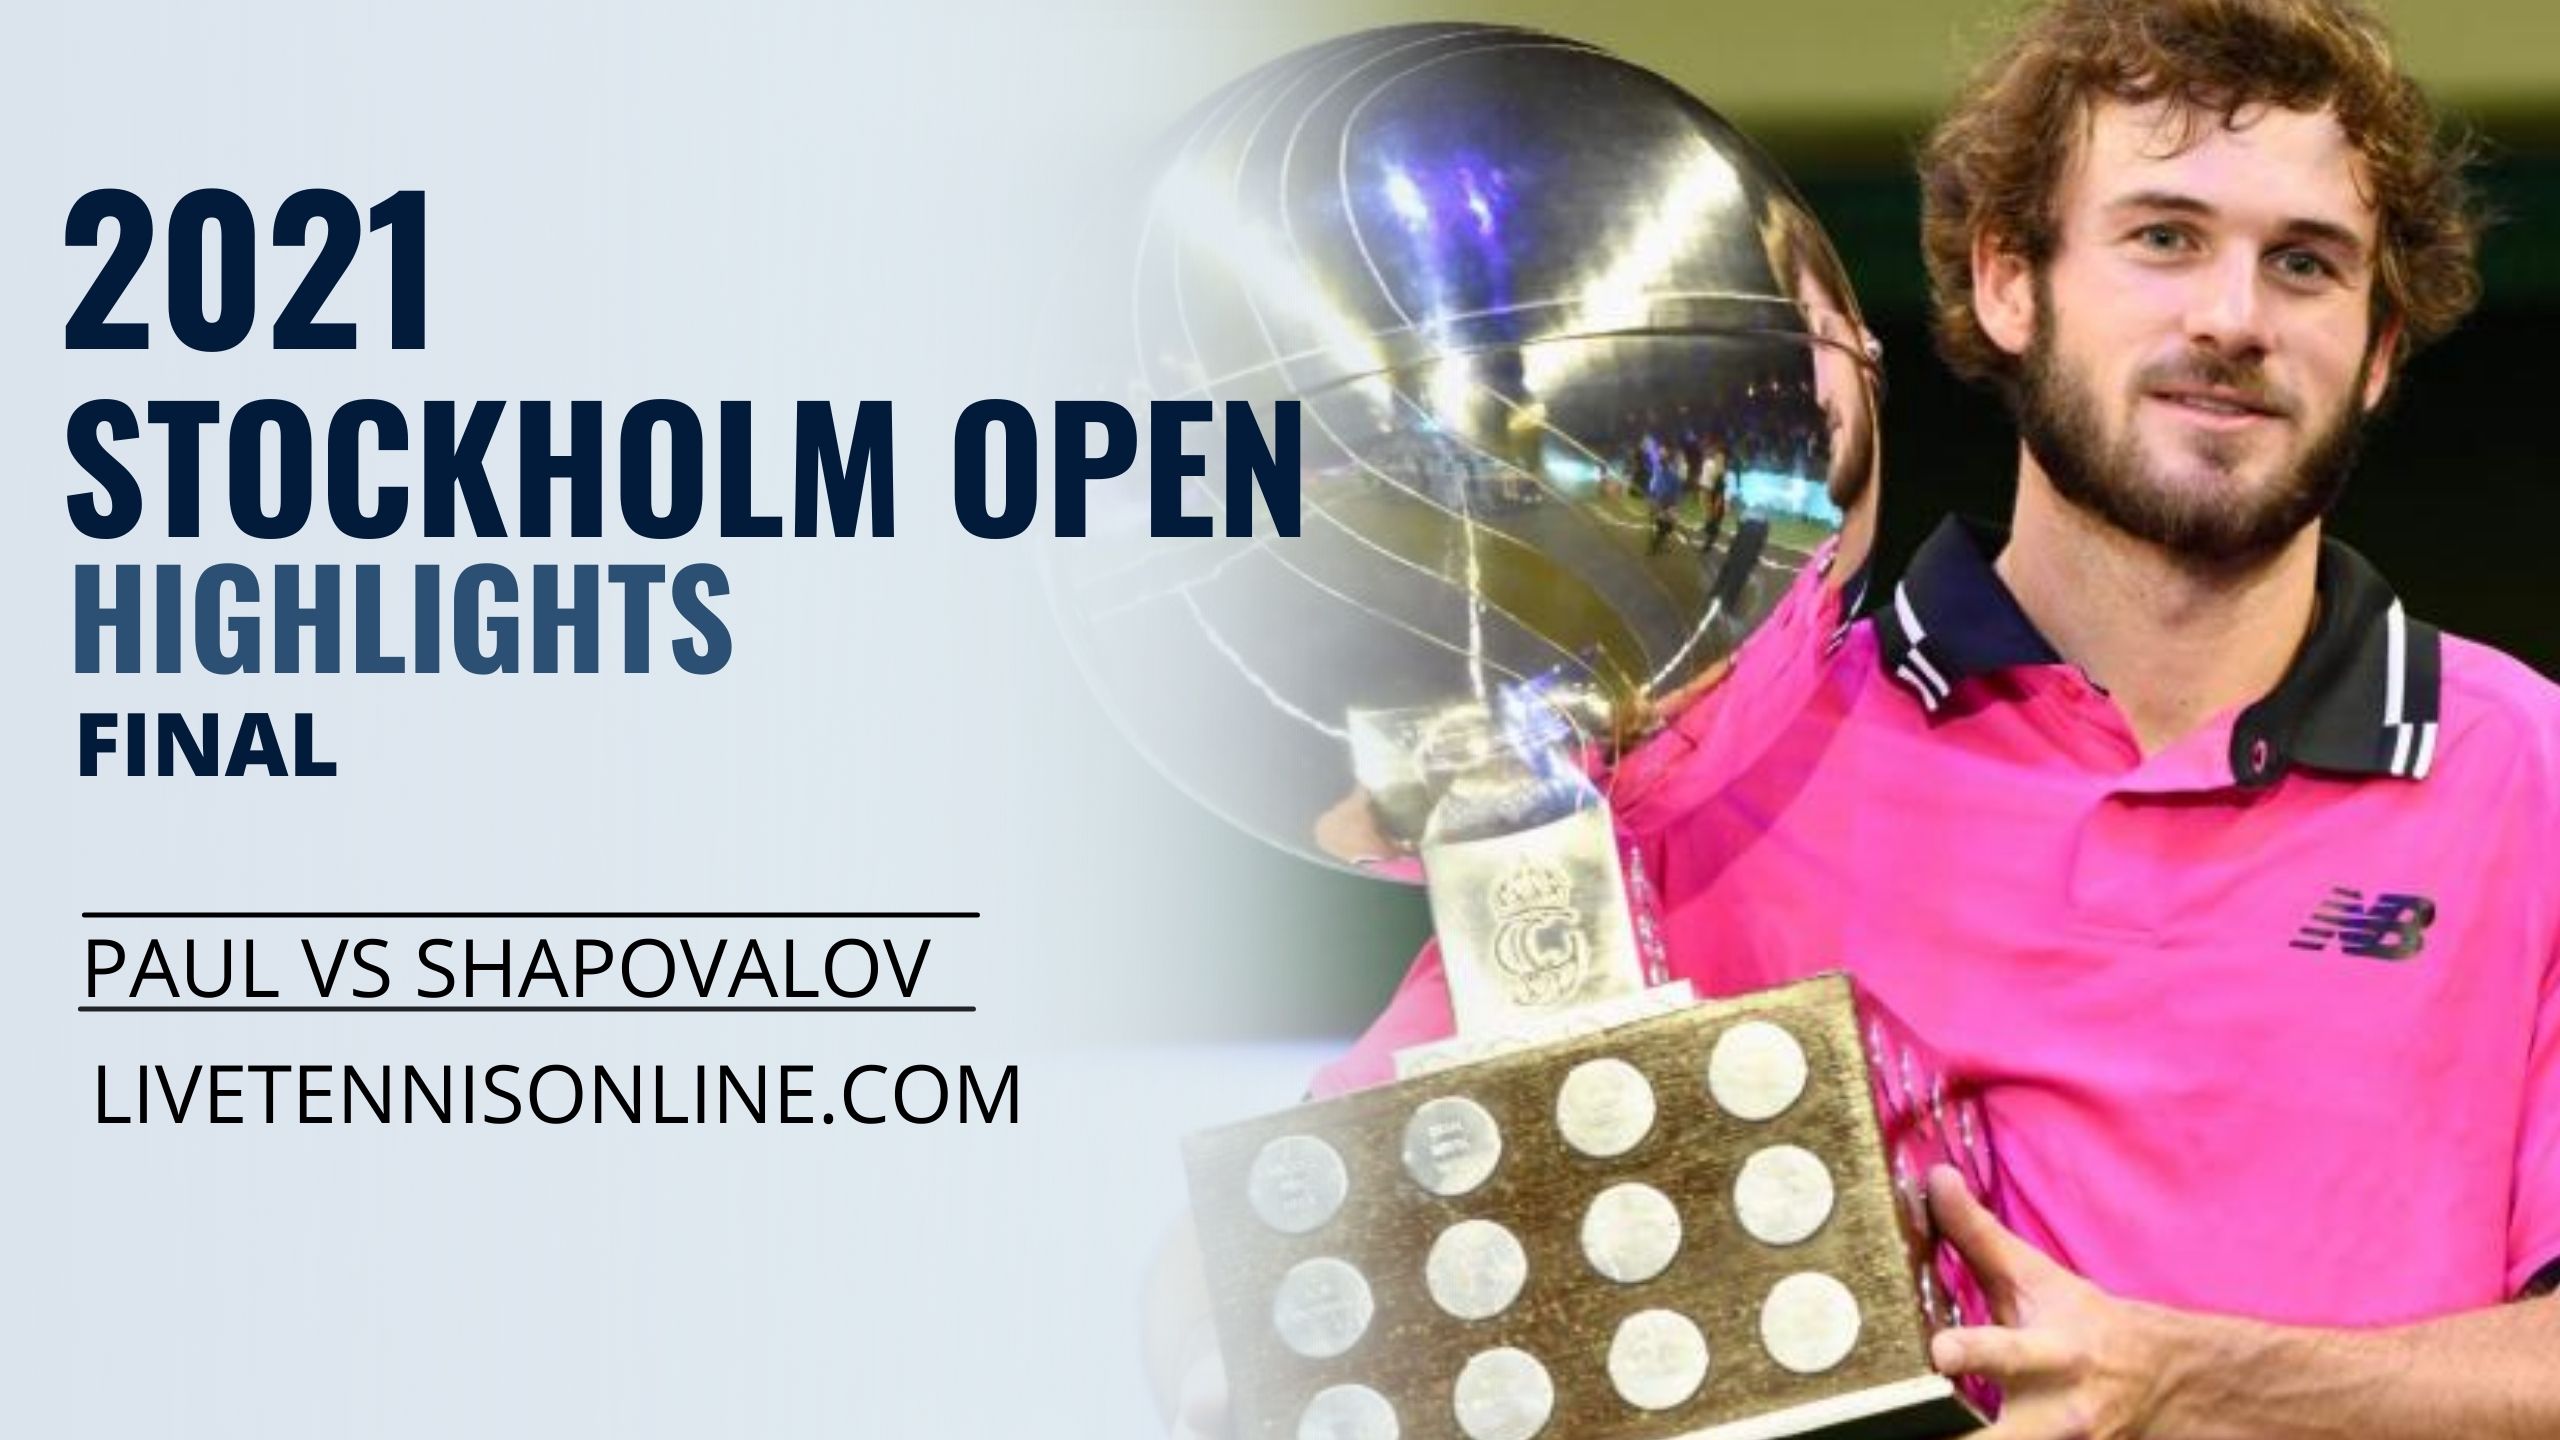 Paul Vs Shapovalov Final Highlights 2021 Stockholm Open